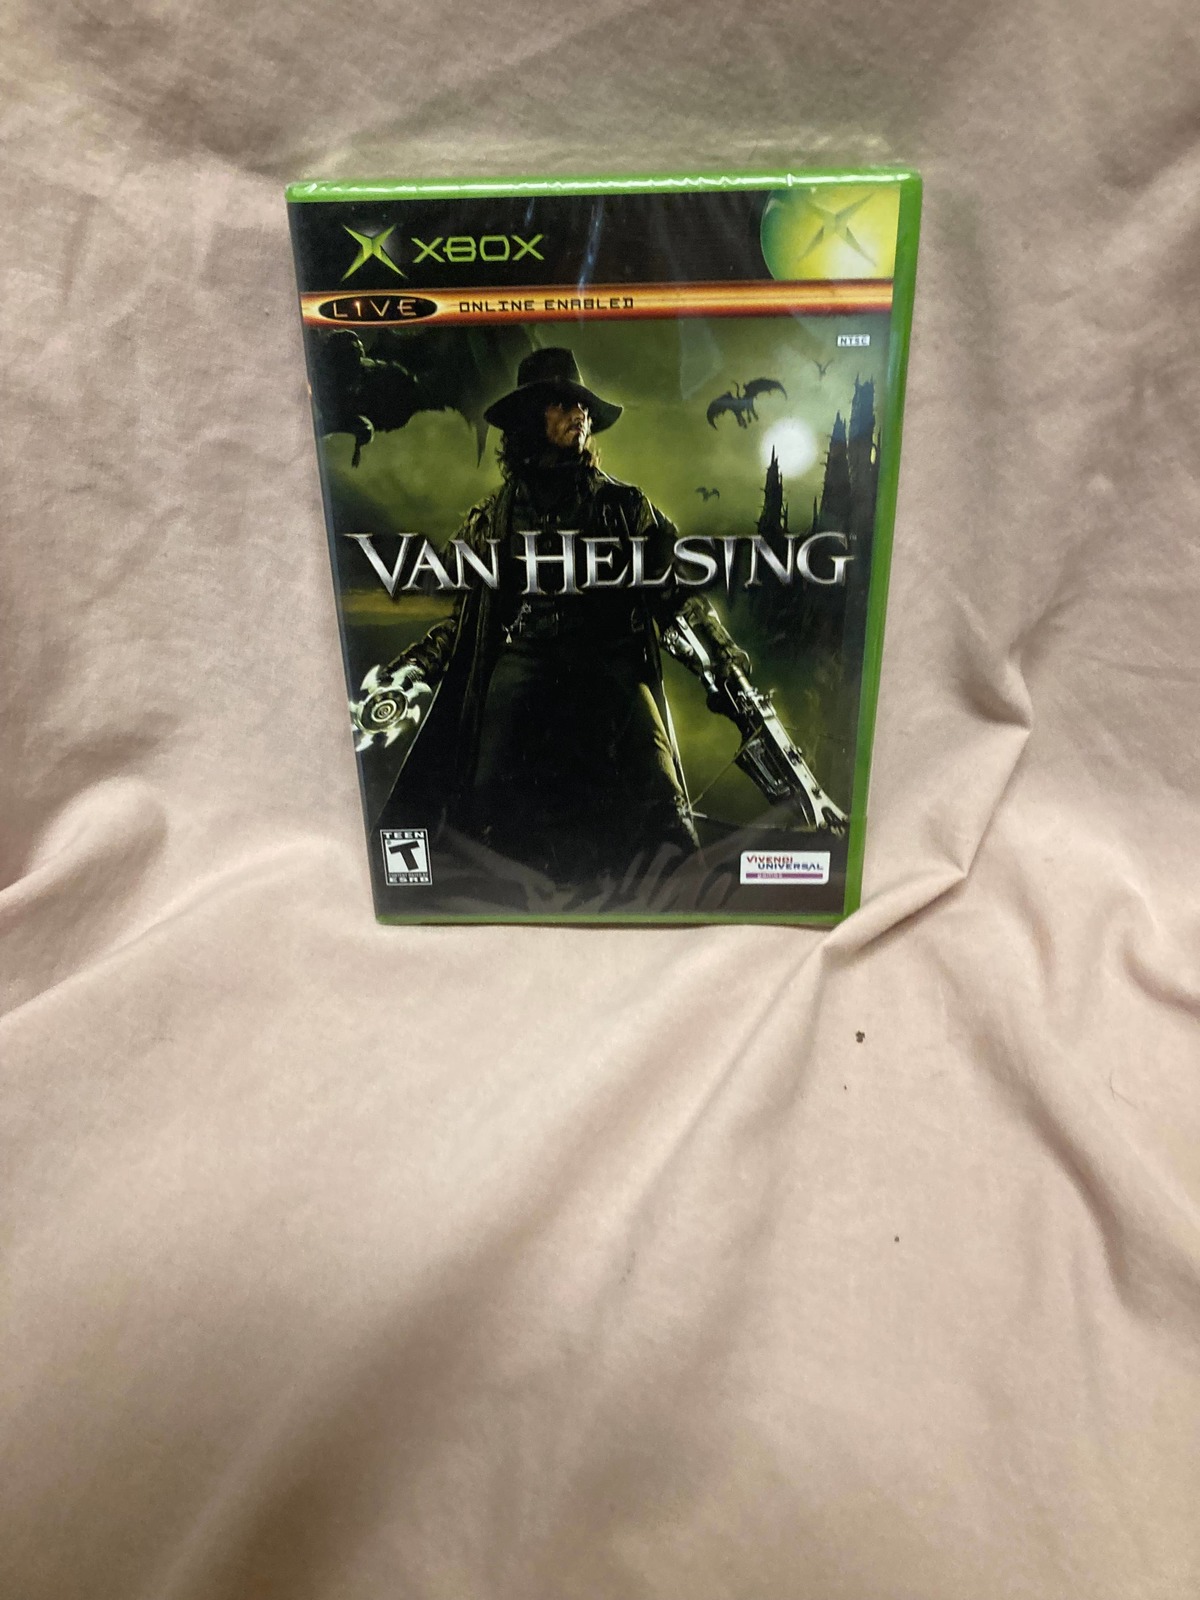 Primary image for Van Helsing (Original Xbox) Brand New Sealed